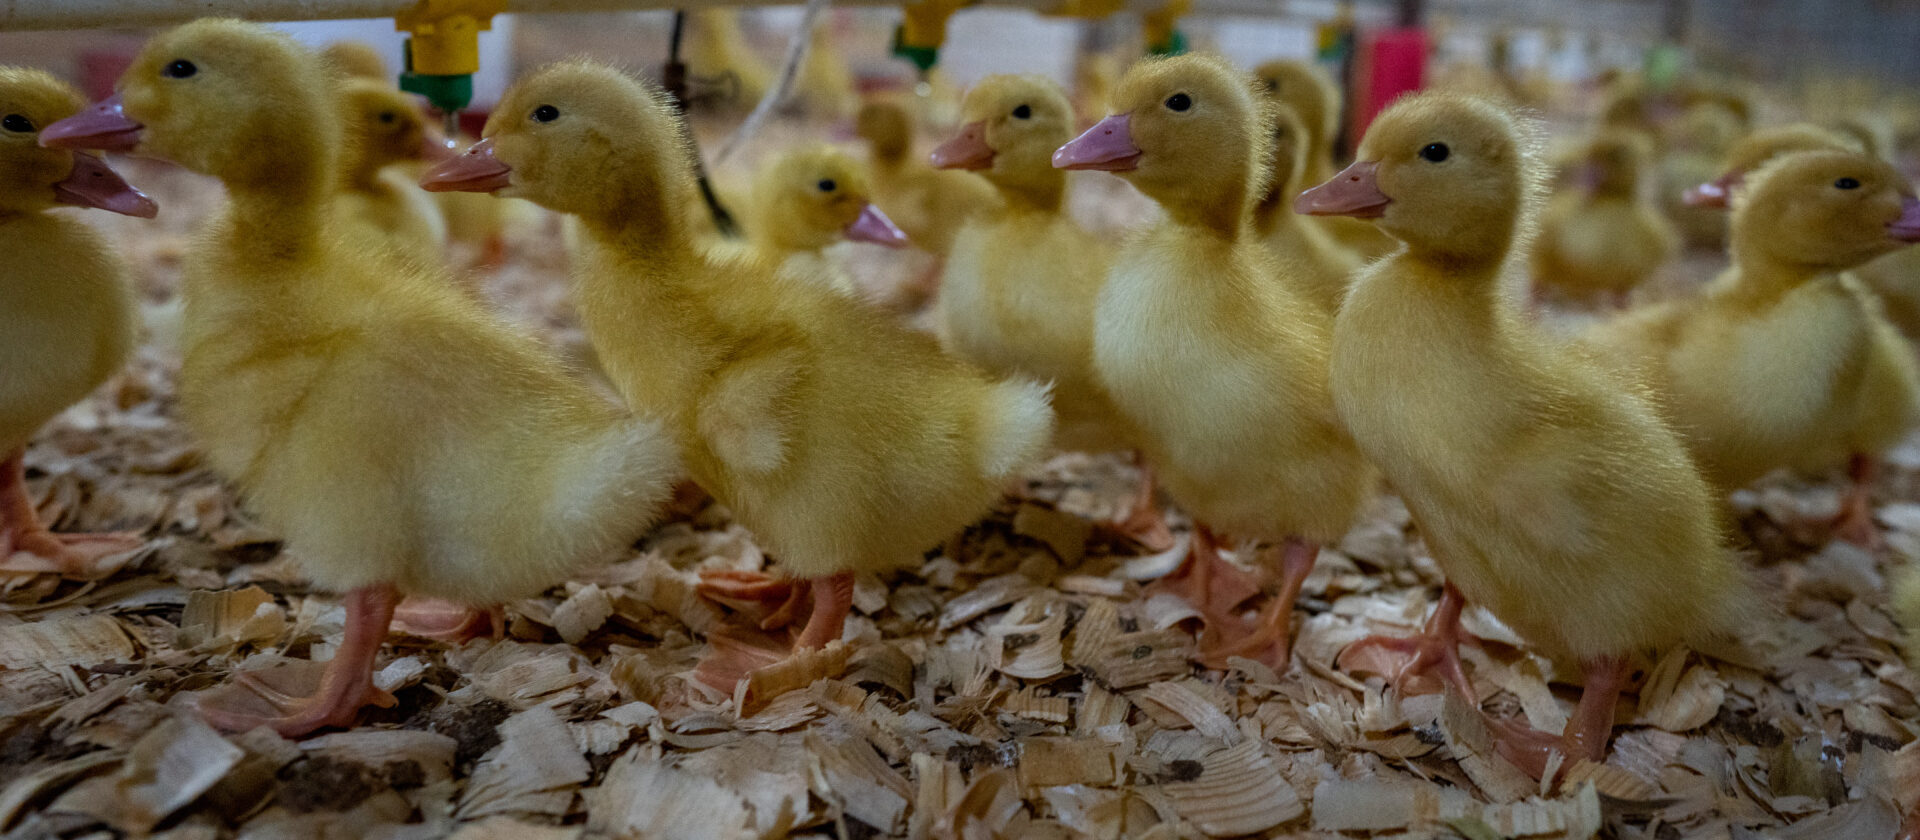 Yellow ducklings in a barn.